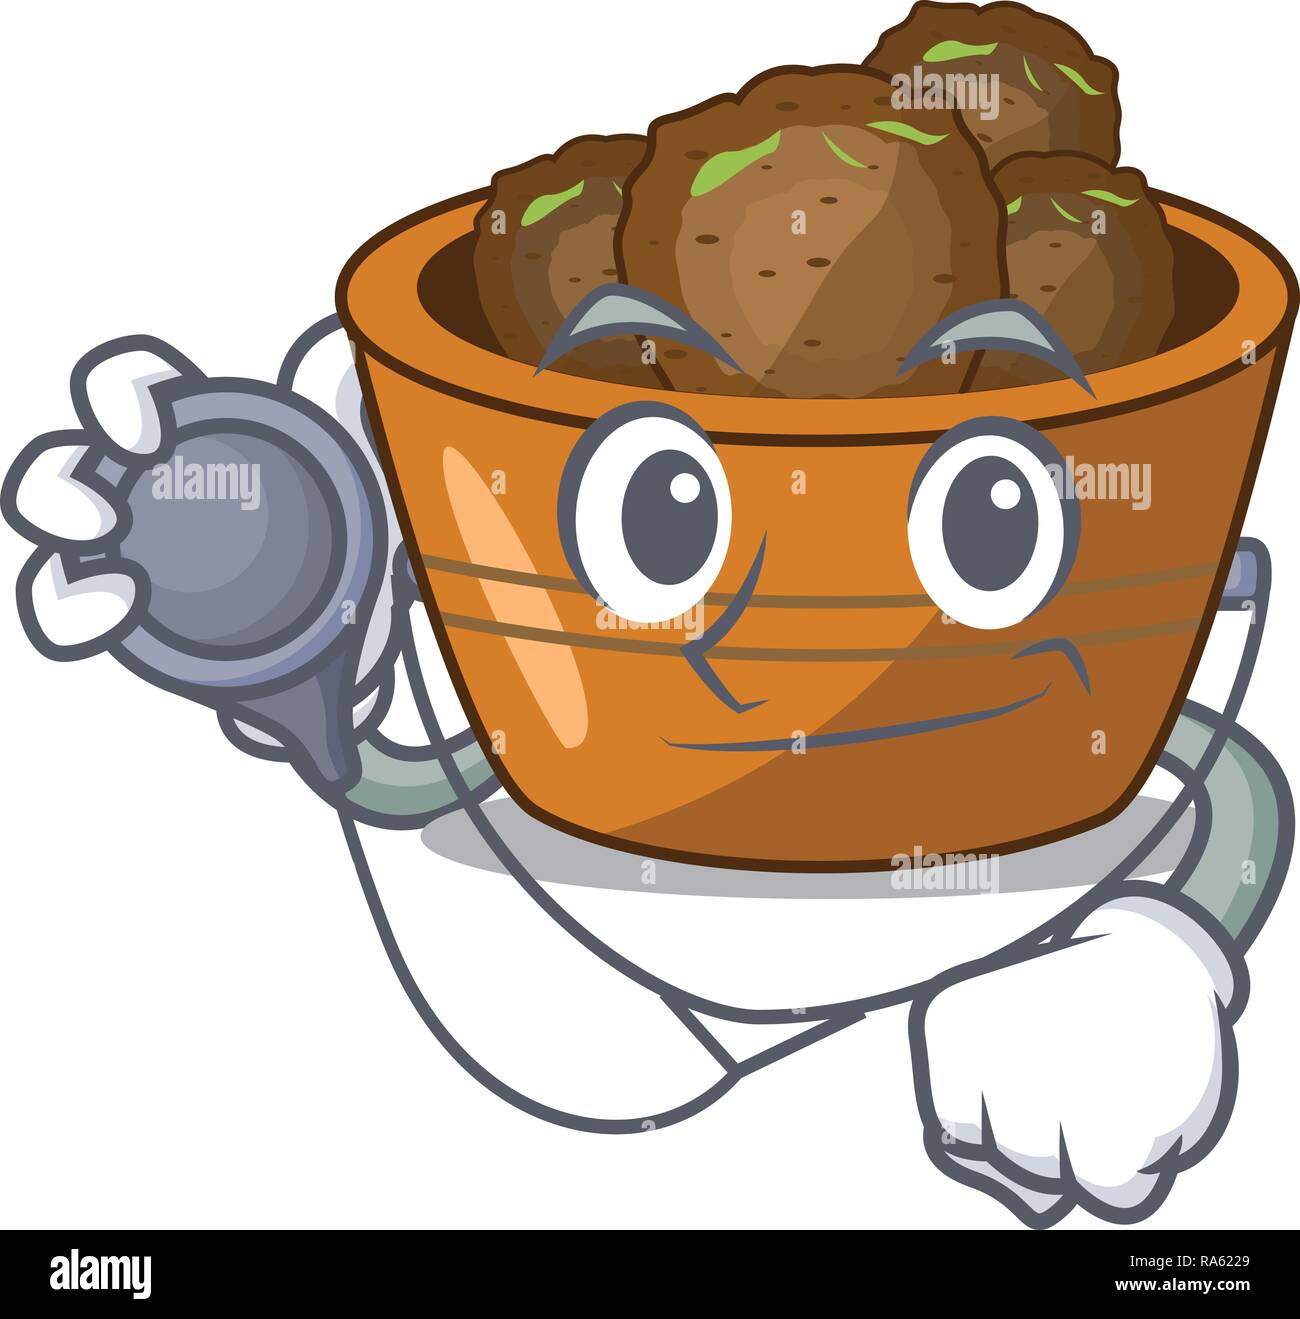 Doctor jamun gulab in a cartoon bowl Stock Vector Image & Art - Alamy